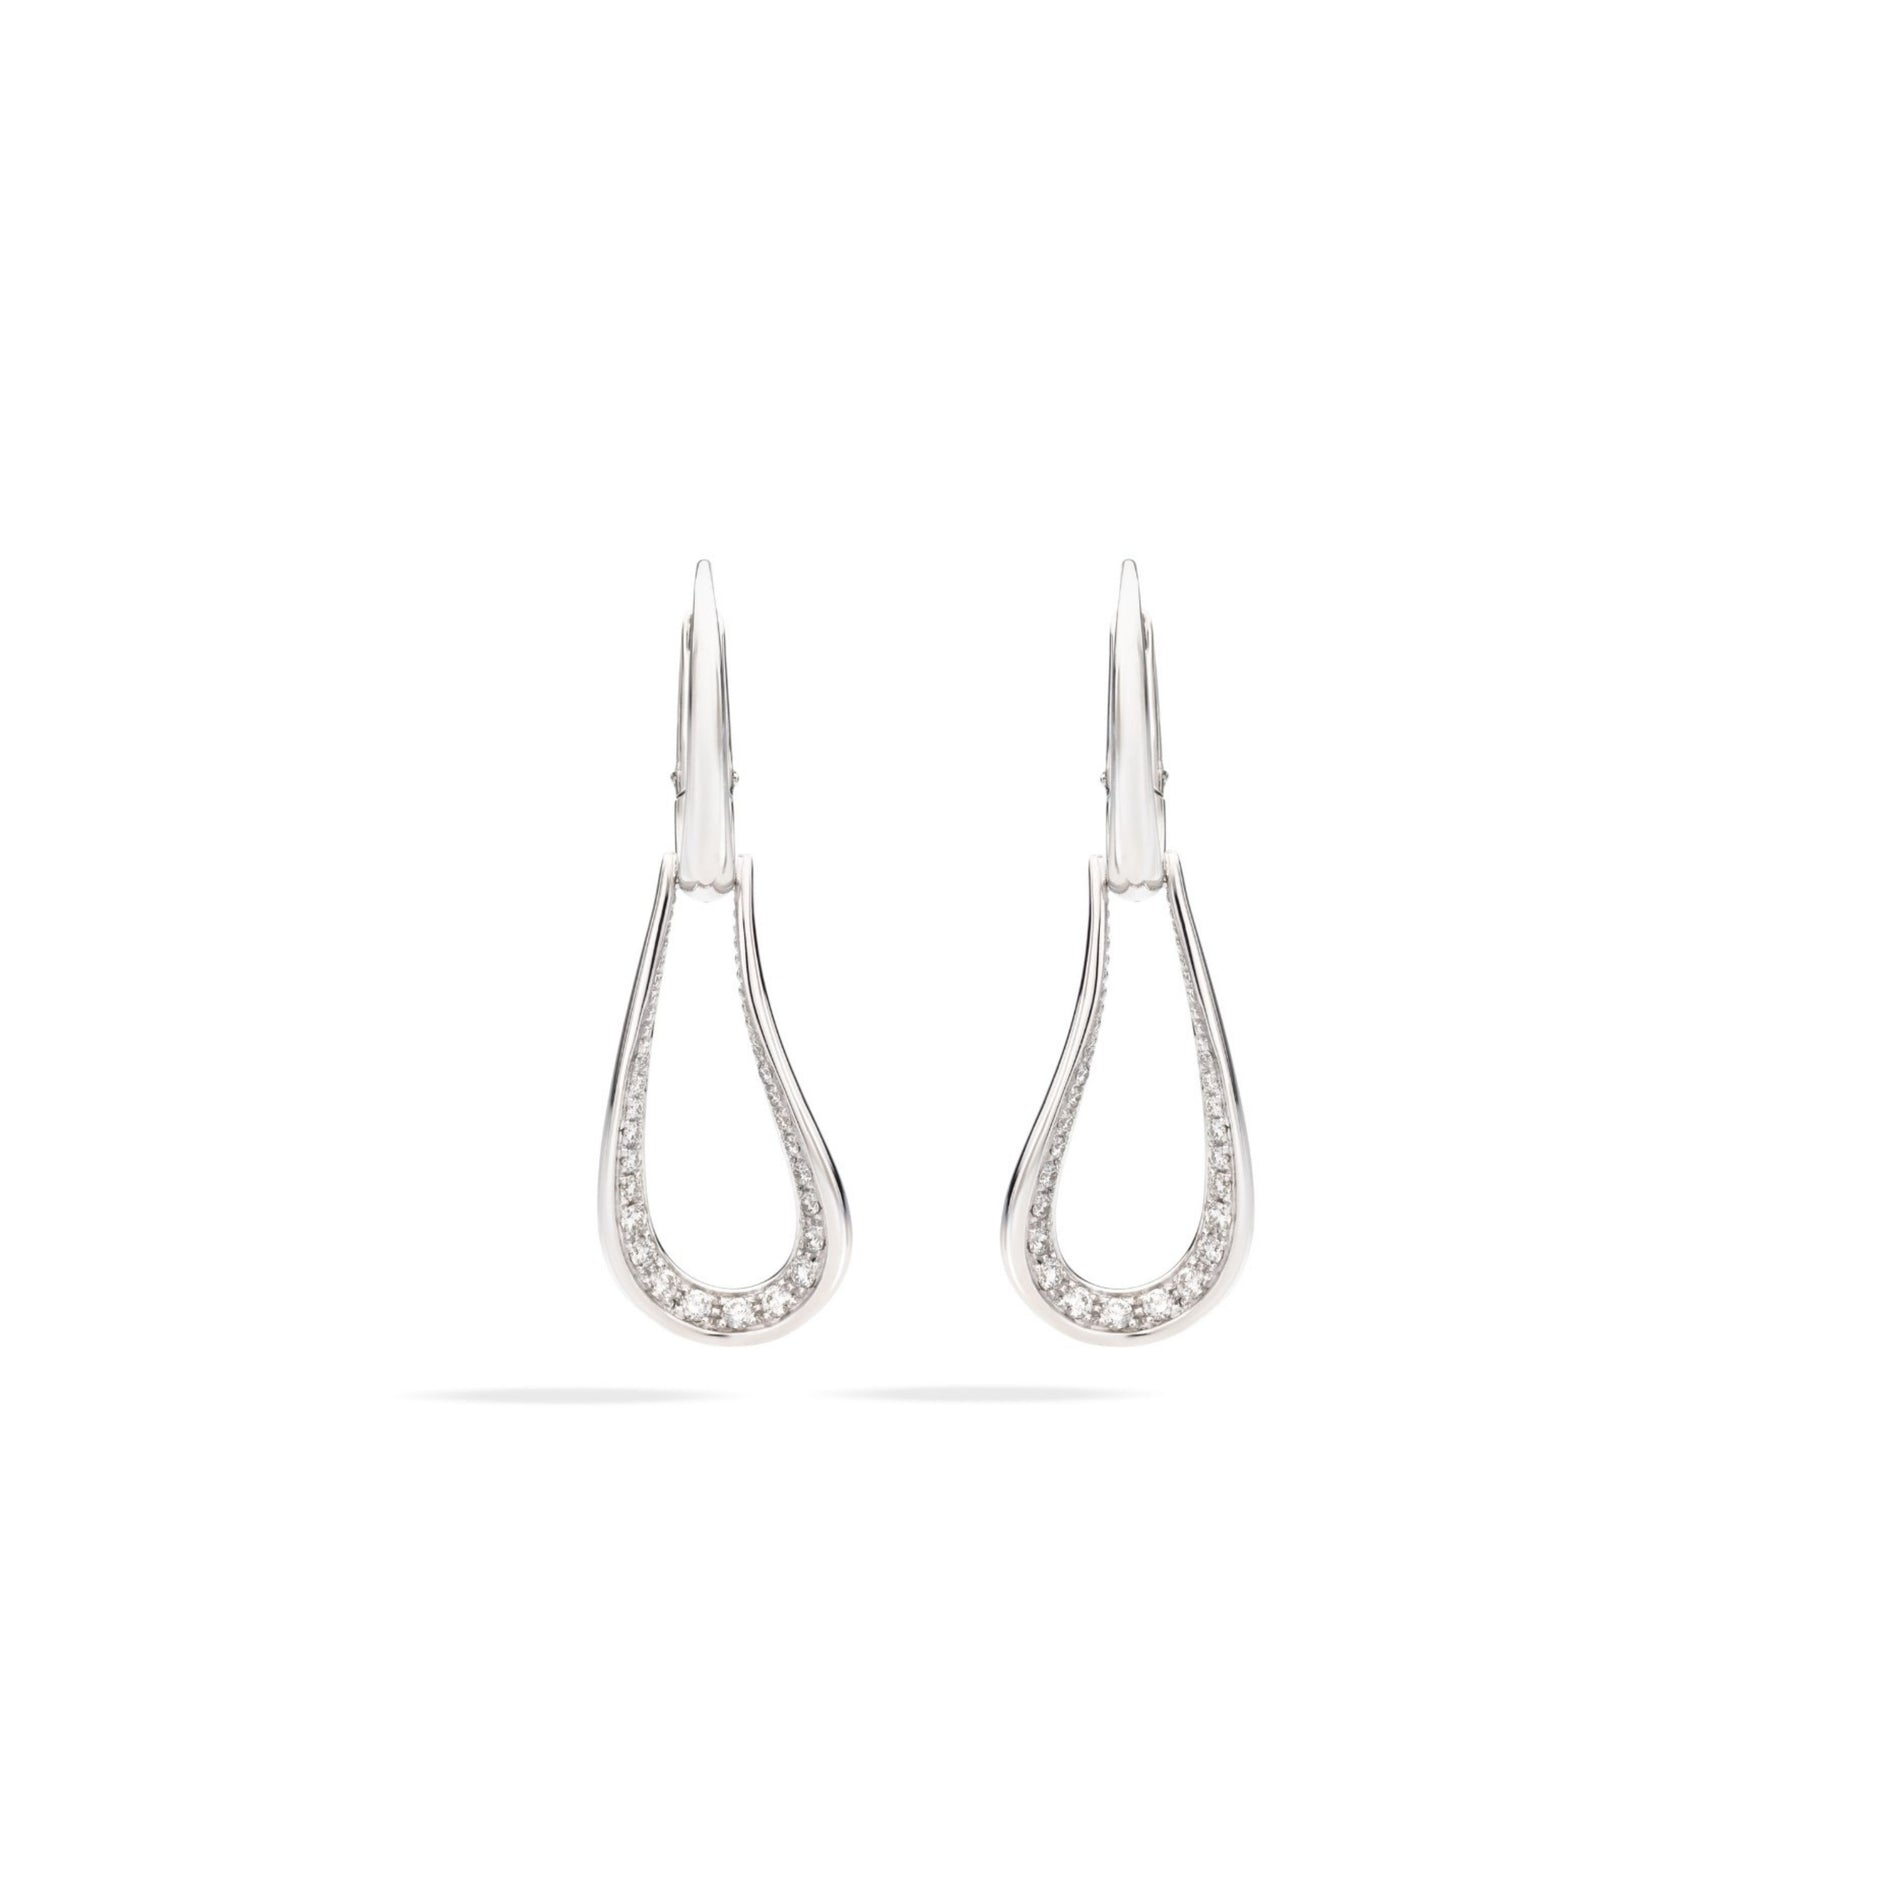 Pomellato Fantina Earrings Diamonds 18k Gold - Orsini Jewellers